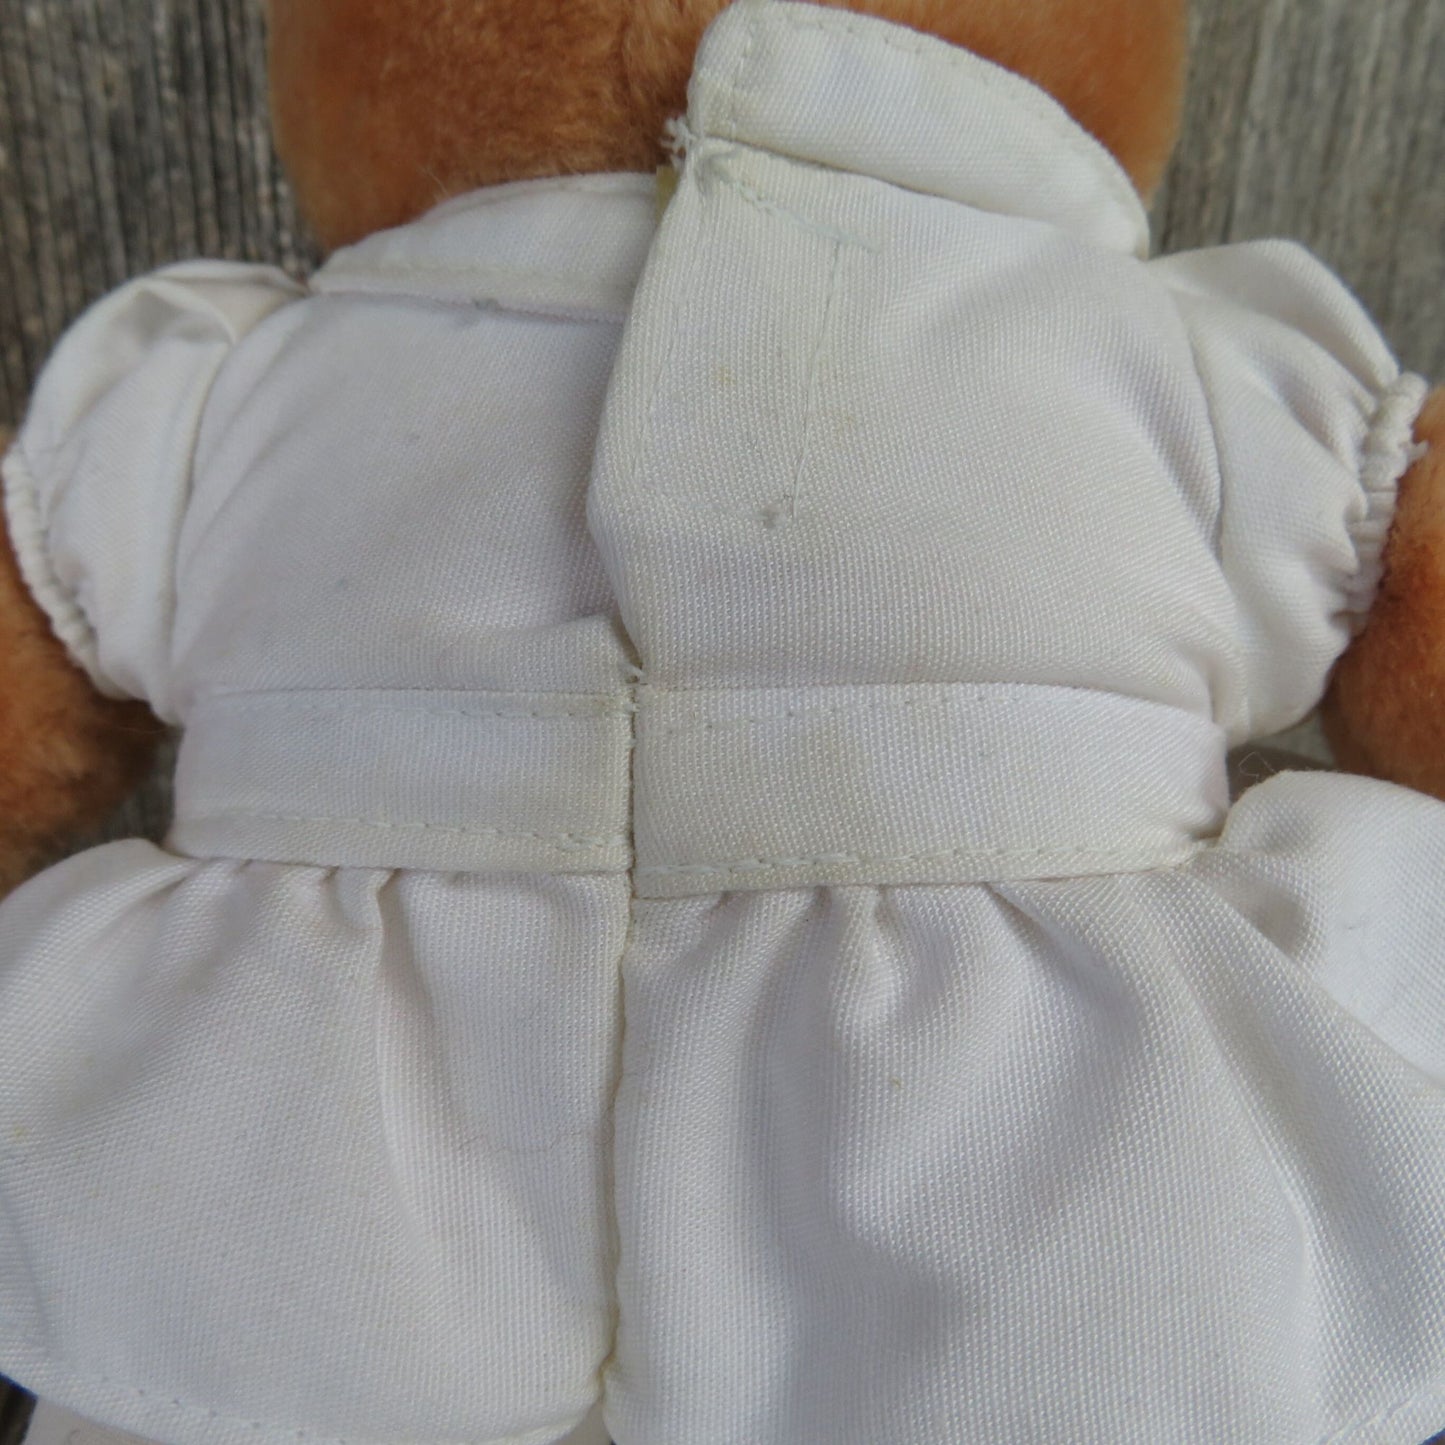 Vintage Nurse Bear Plush White Uniform Dakin Stuffed Animal 1985